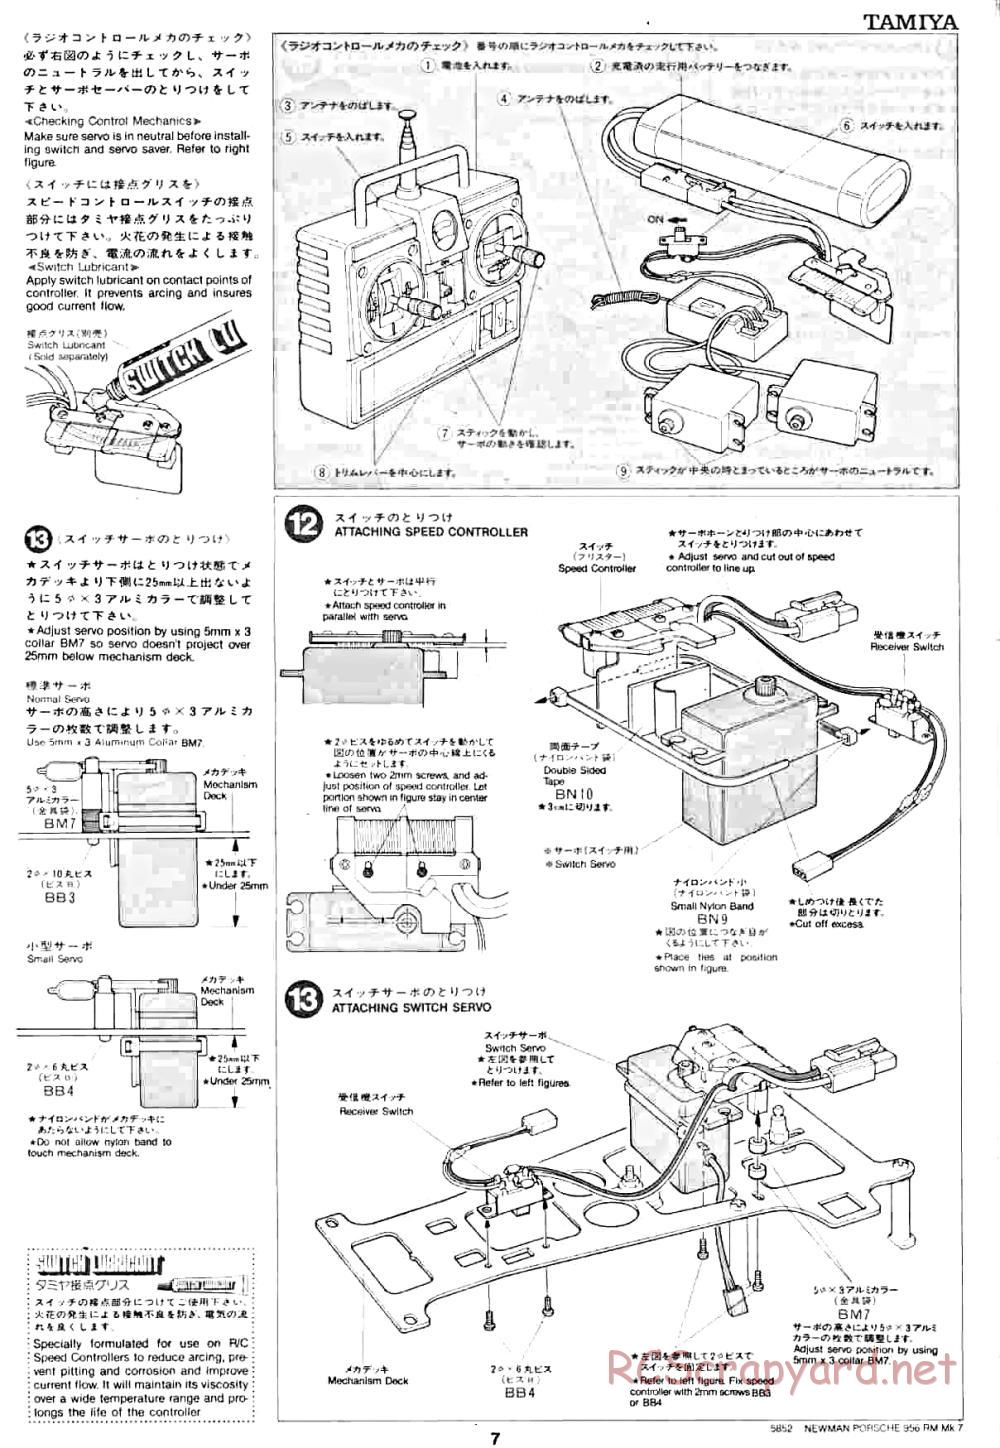 Tamiya - Newman Prsch 956 - RM MK.7 - 58052 - Manual - Page 7